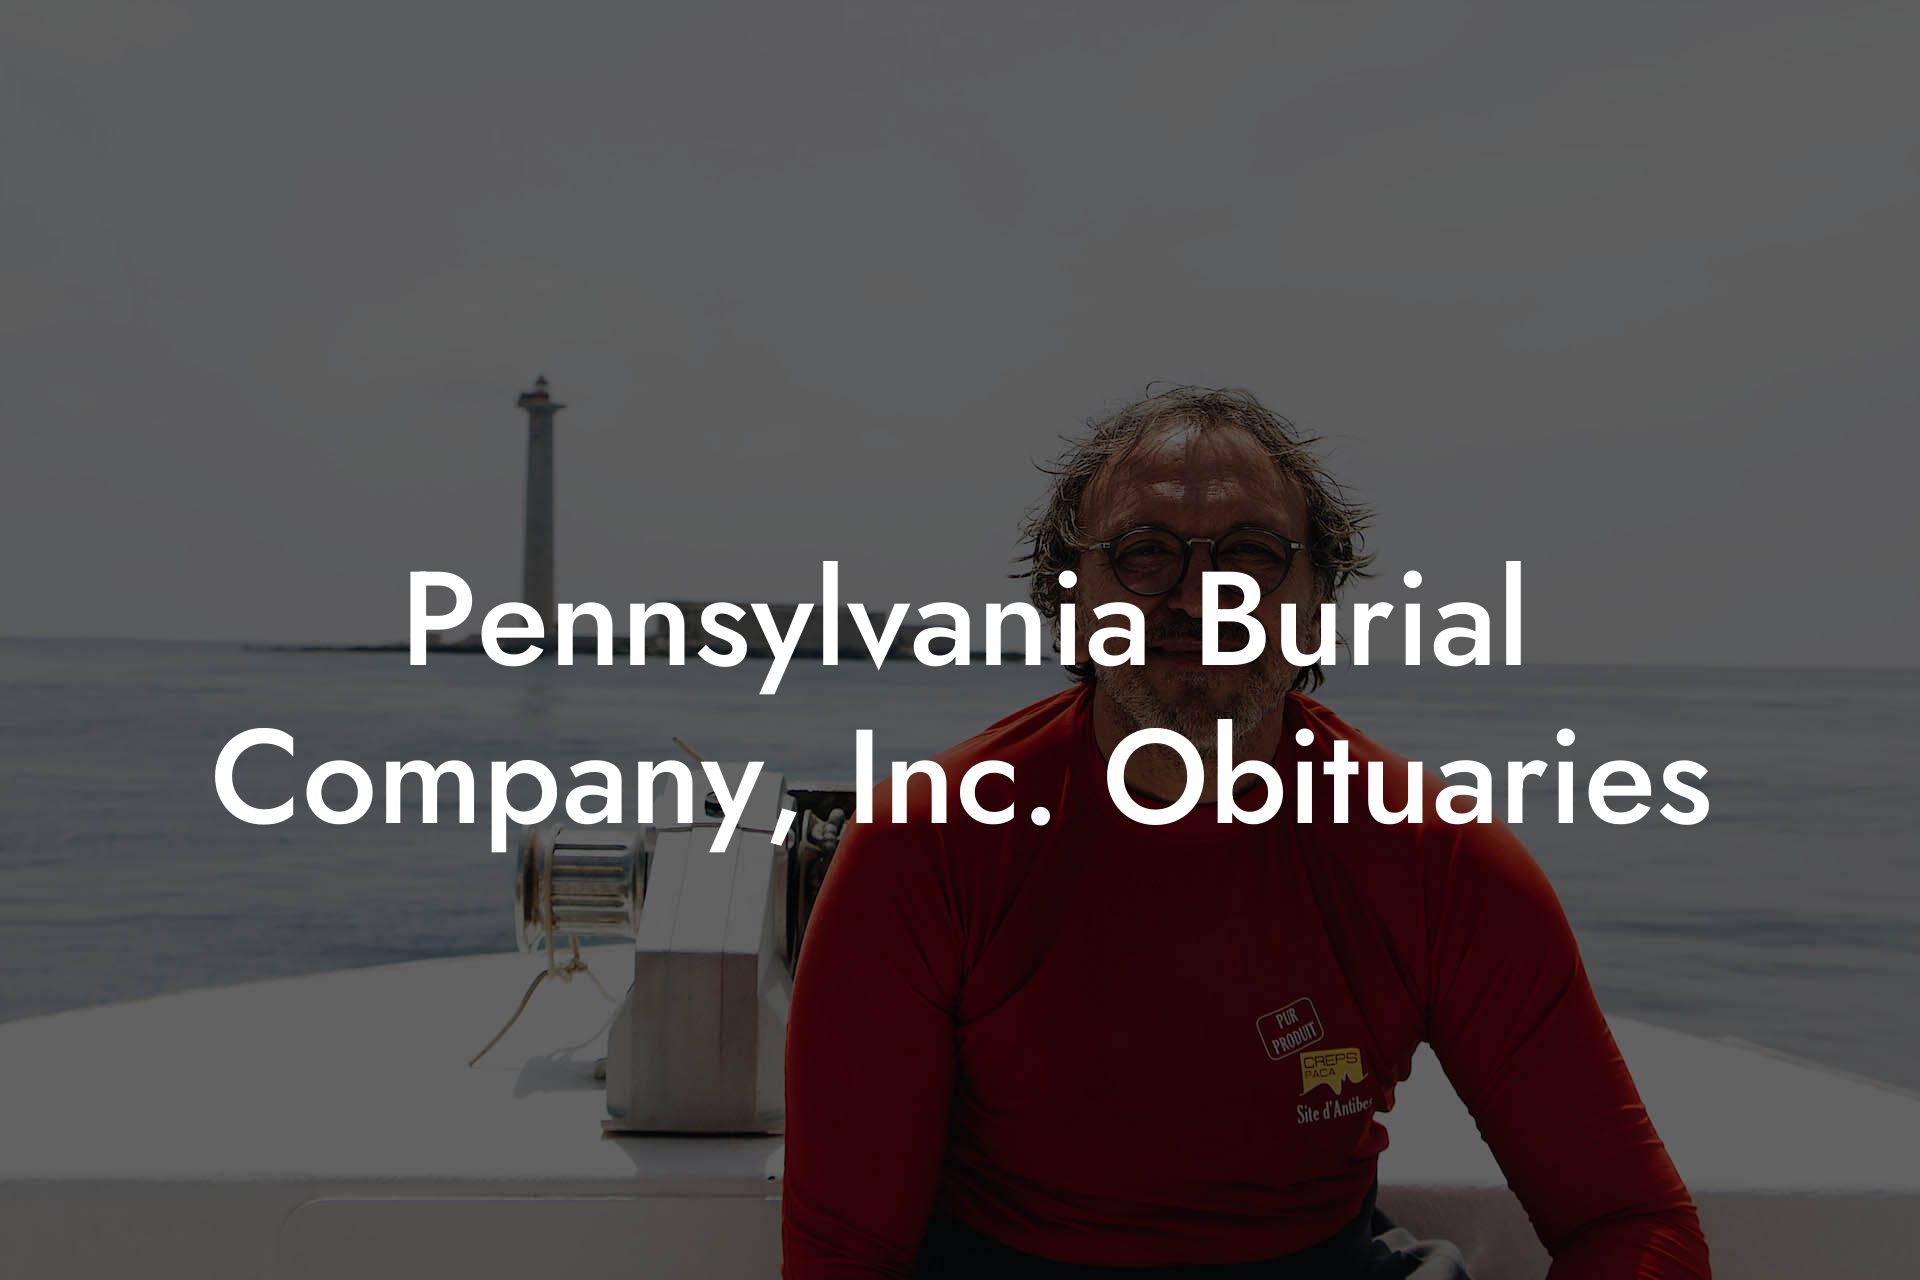 Pennsylvania Burial Company, Inc. Obituaries